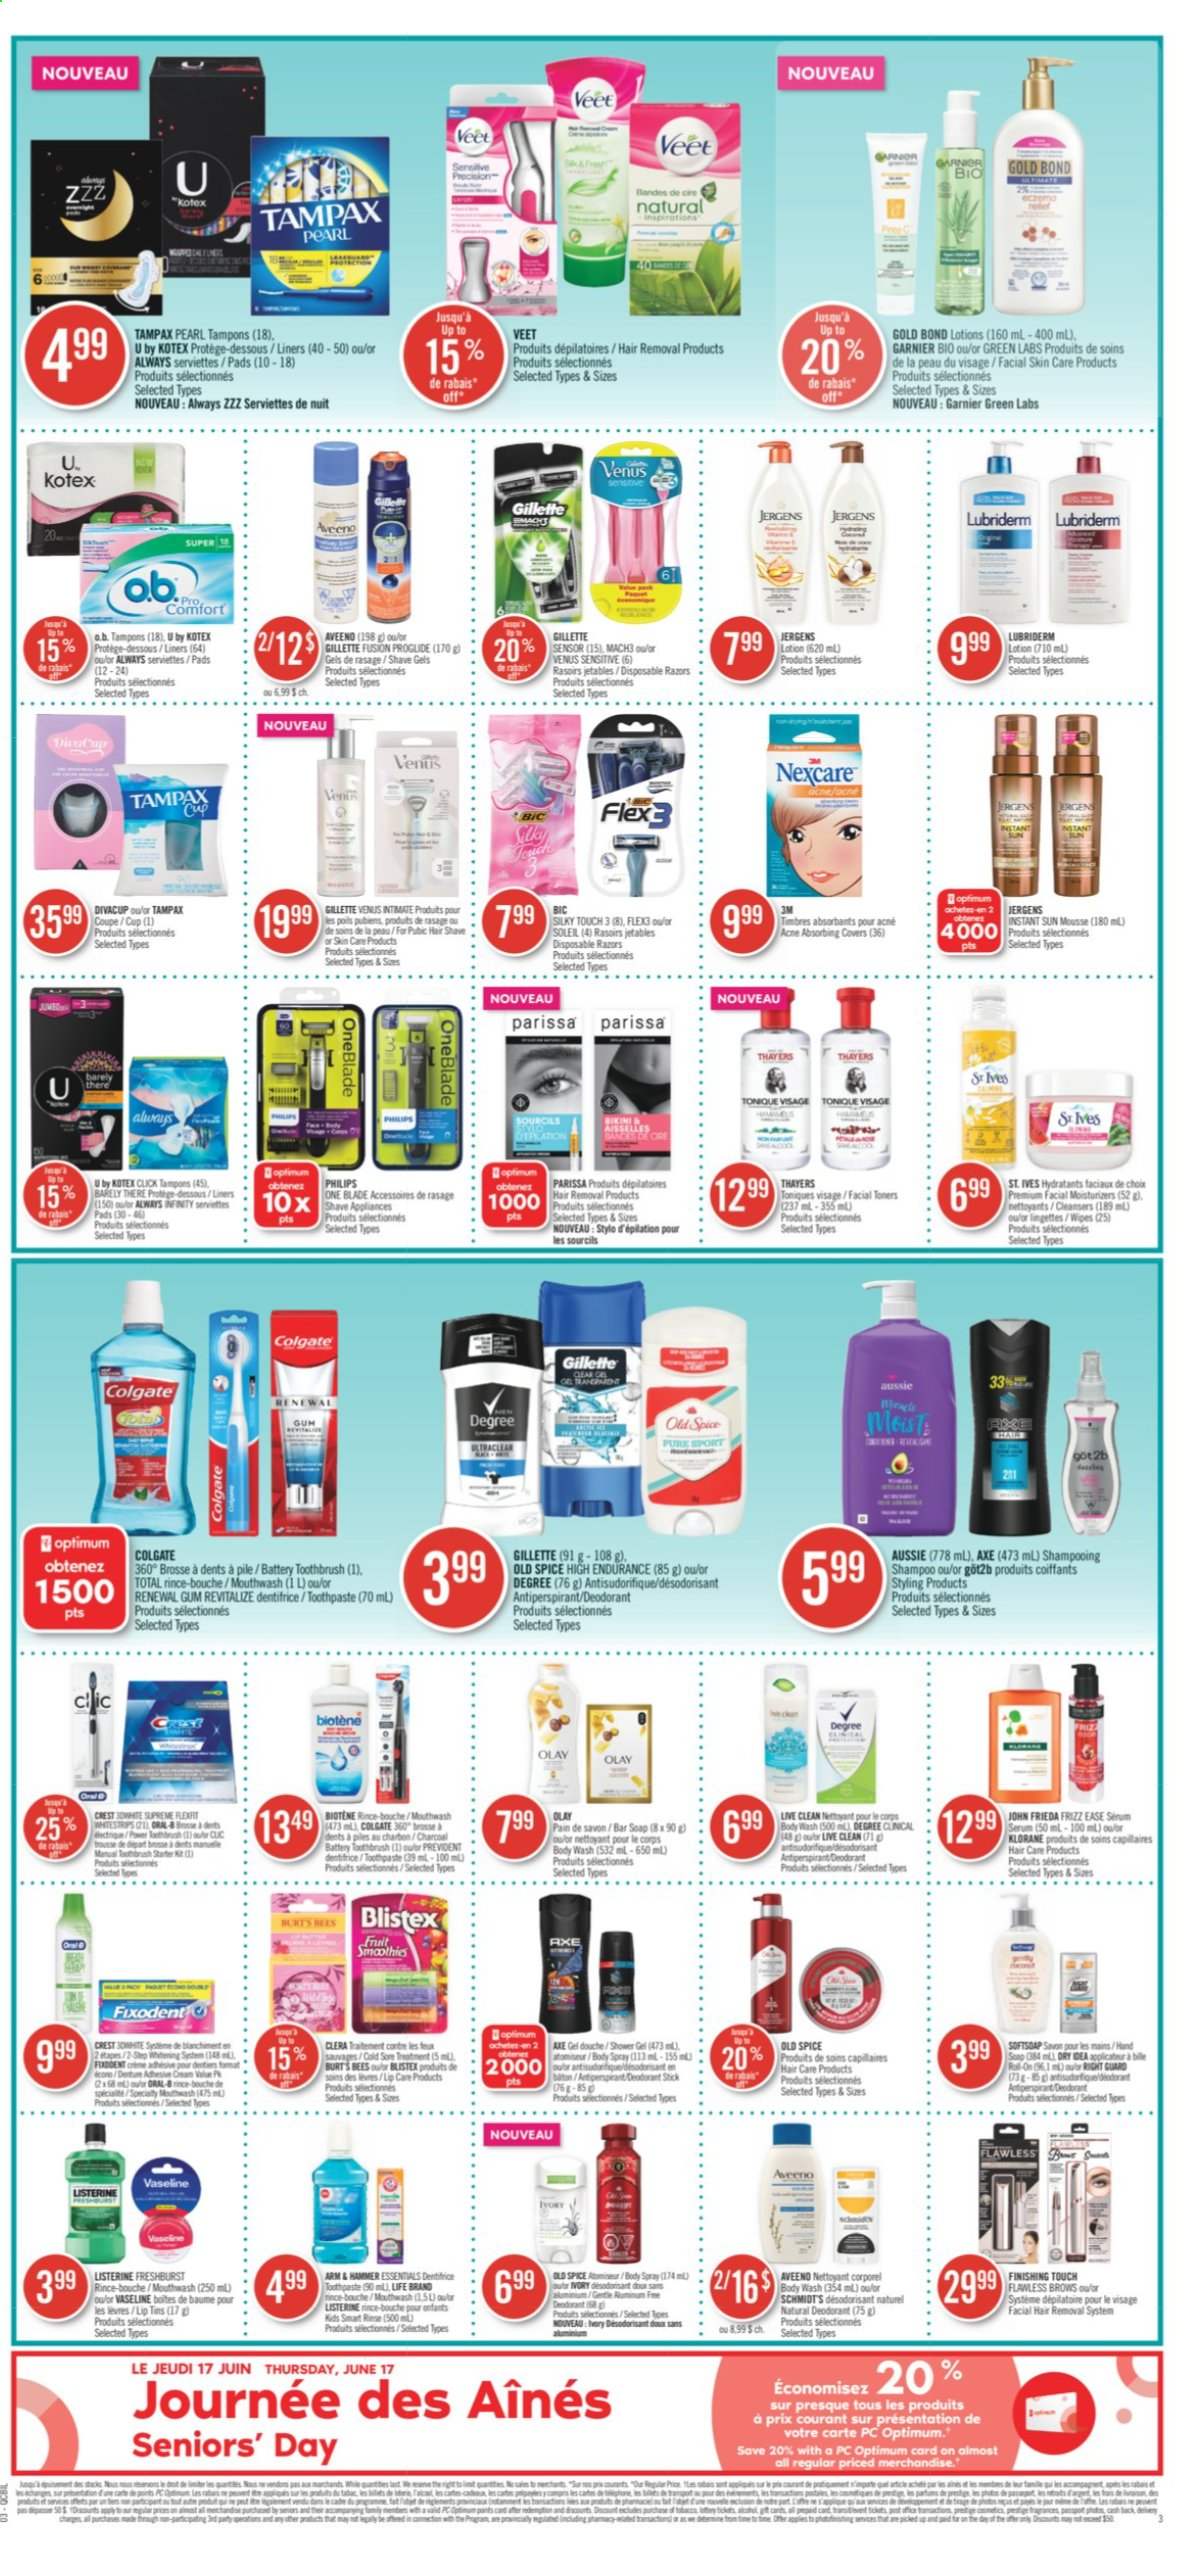 thumbnail - Pharmaprix Flyer - June 12, 2021 - June 18, 2021 - Sales products - spice, Aveeno, body wash, shower gel, Softsoap, Vaseline, soap bar, soap, Biotene, toothbrush, toothpaste, mouthwash, Fixodent, Crest, Kotex, tampons, moisturizer, serum, Olay, Aussie, John Frieda, Klorane, body lotion, Lubriderm, Jergens, anti-perspirant, BIC, Venus, hair removal, Veet, disposable razor, cup, hammer, Garnier, Gillette, Listerine, shampoo, Tampax, Old Spice, deodorant. Page 4.